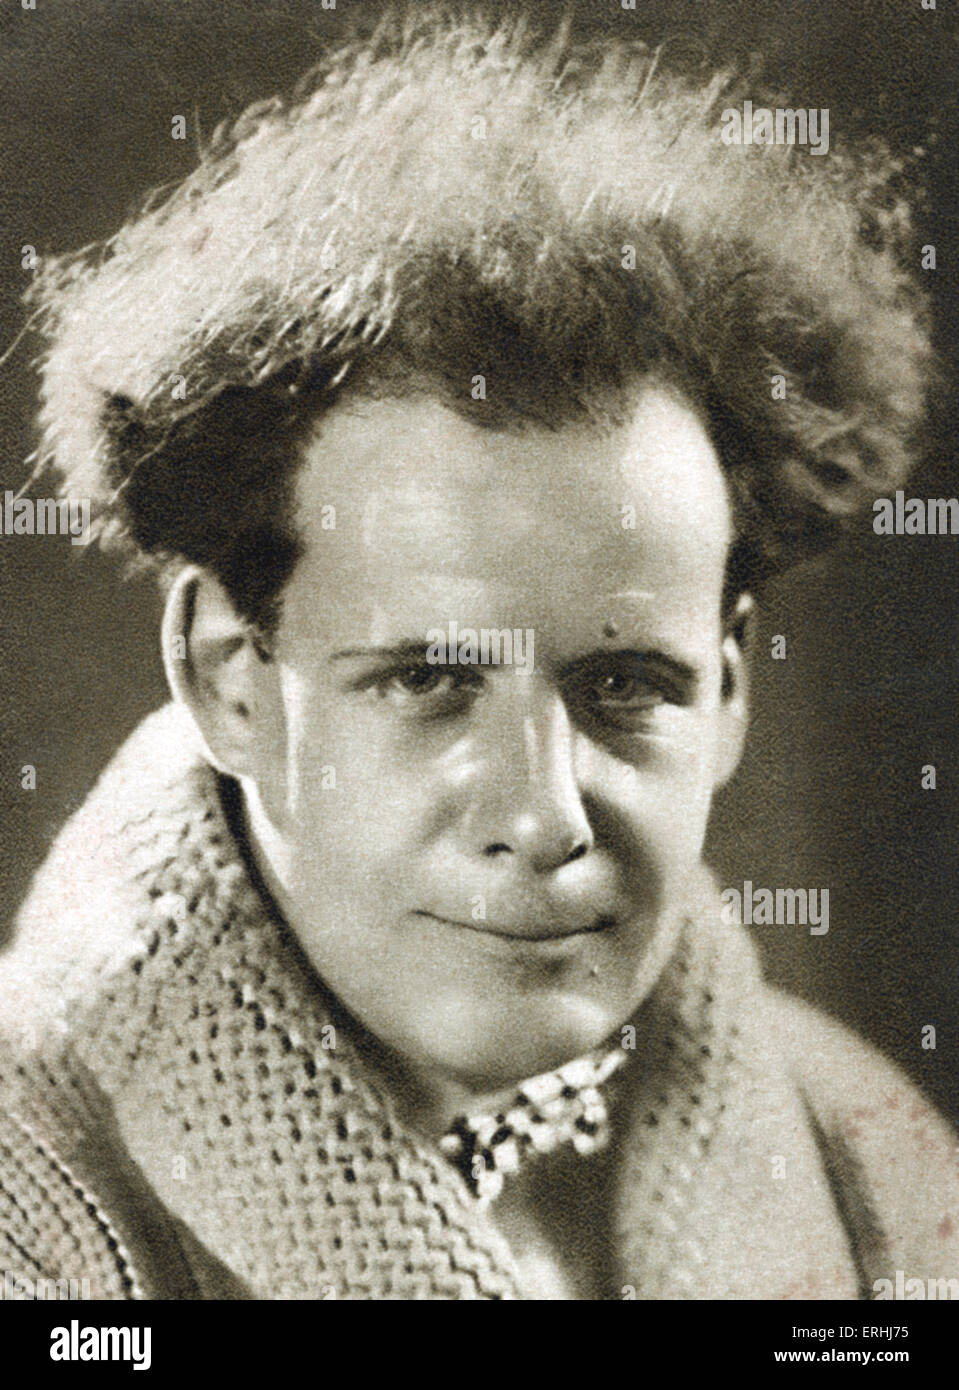 Sergei Eisenstein - portrait of the Russian film director. 23 January 1898 - 11 February 1948. Stock Photo